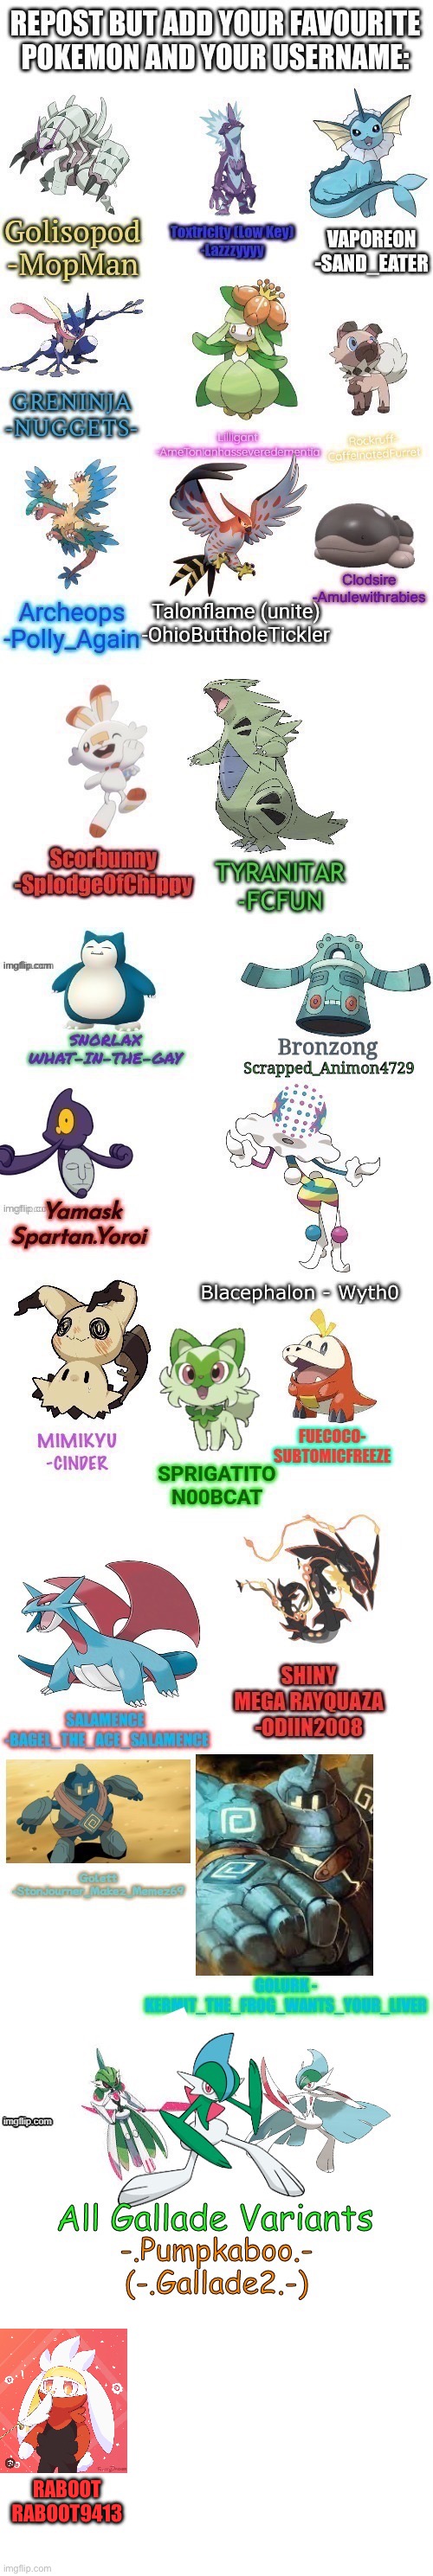 Repost with favorite Pokémon | RABOOT

RABOOT9413 | image tagged in repost with favorite pok mon | made w/ Imgflip meme maker